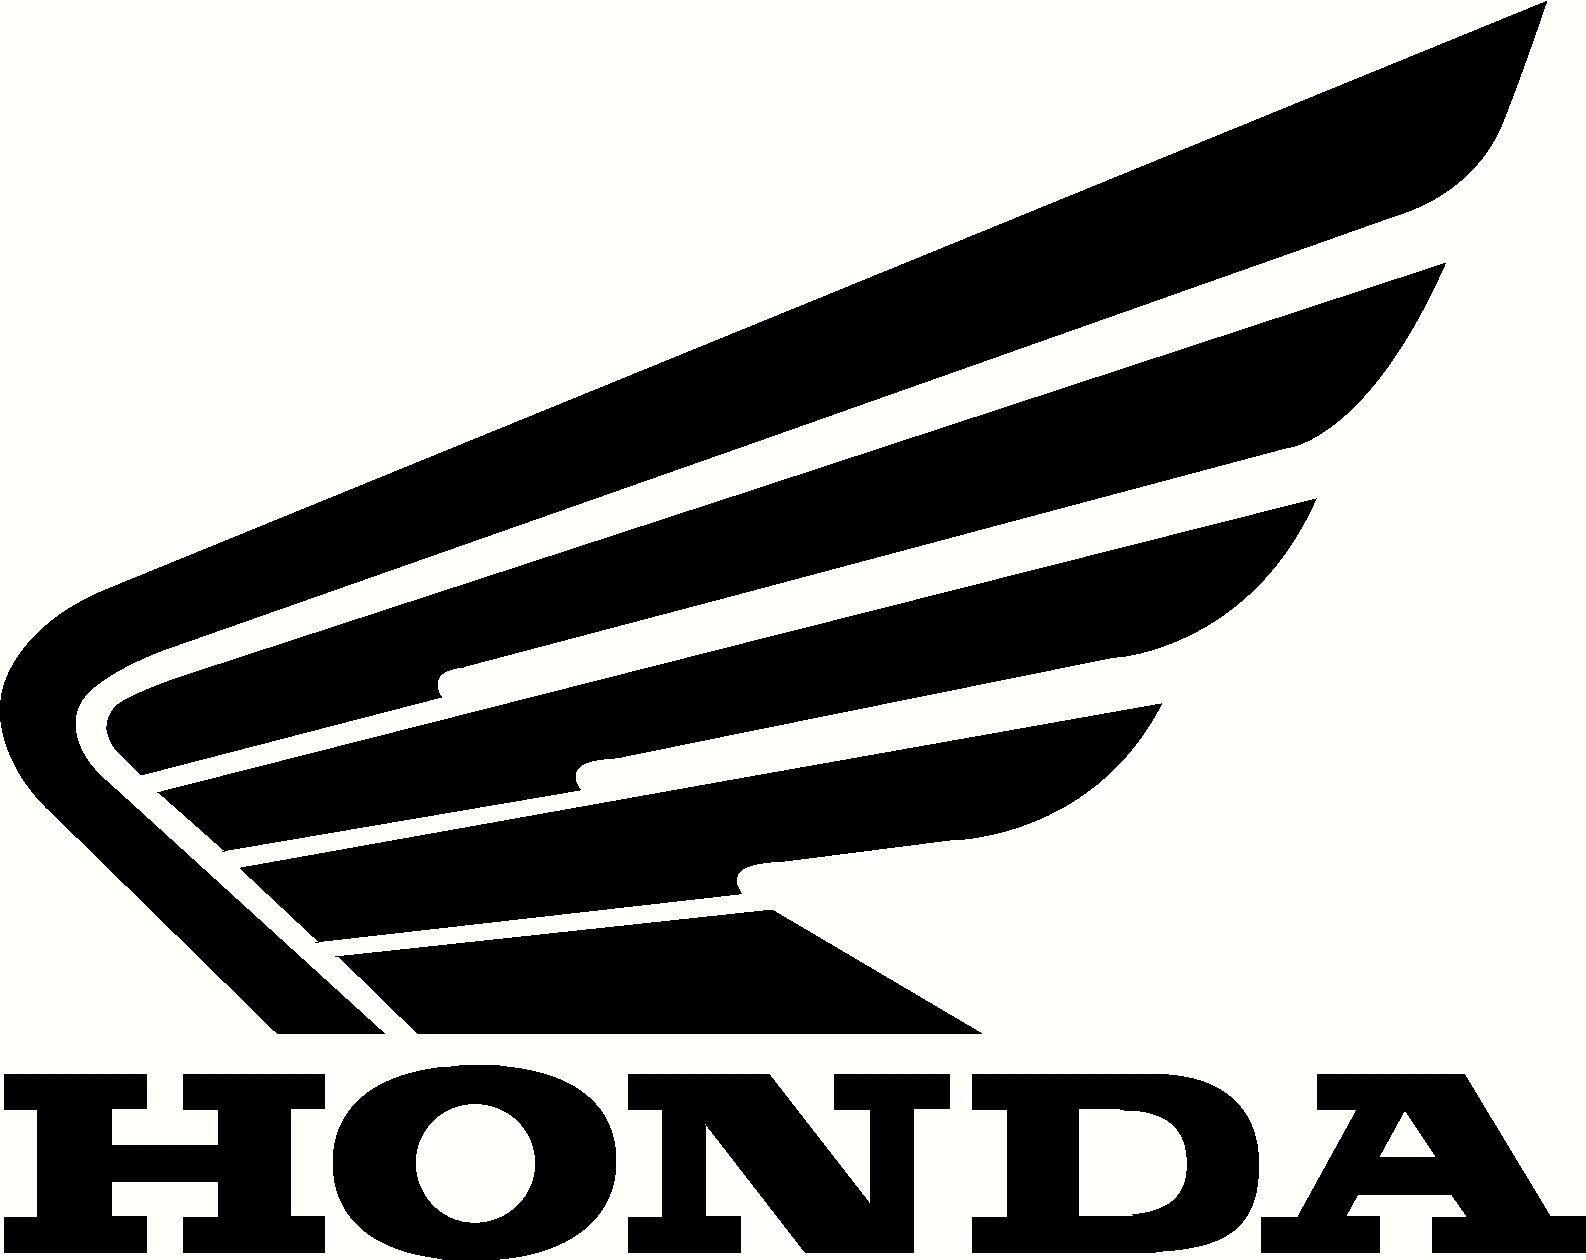 Black Honda Motorcycle Logo - Pin by Ross Robinson on motorcycles logos | Pinterest | Motorcycle ...